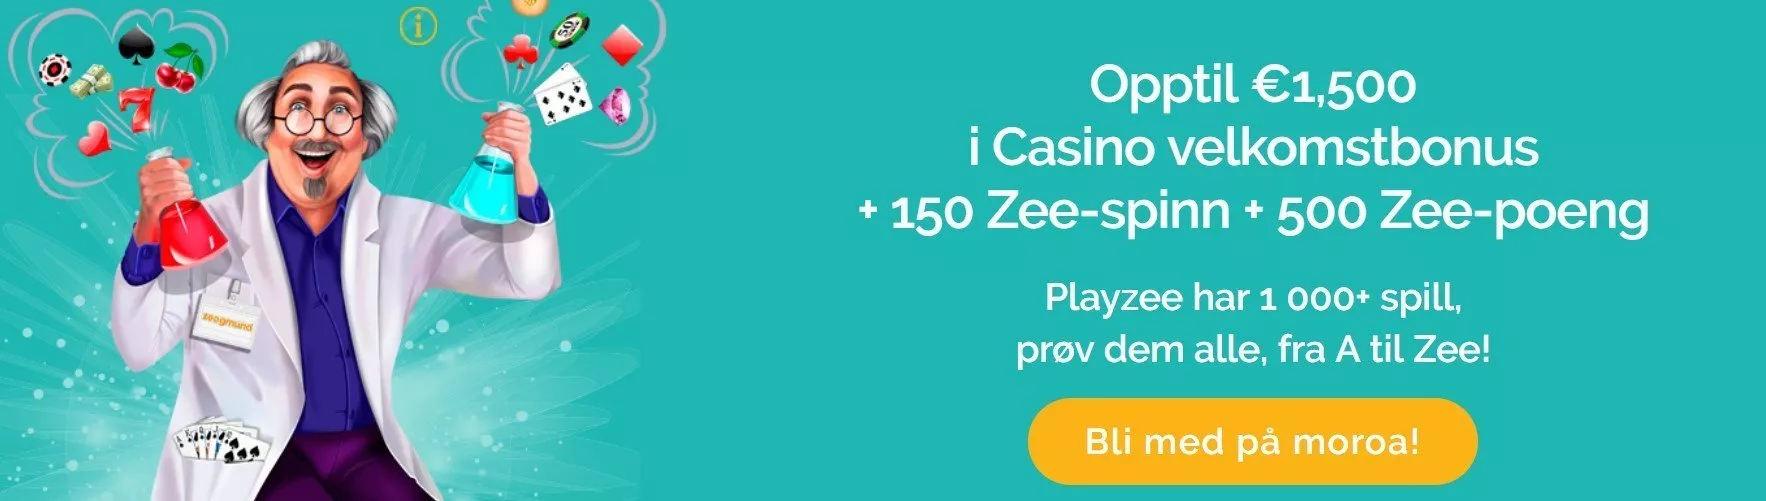 PlayZee Casino velkomstbonus